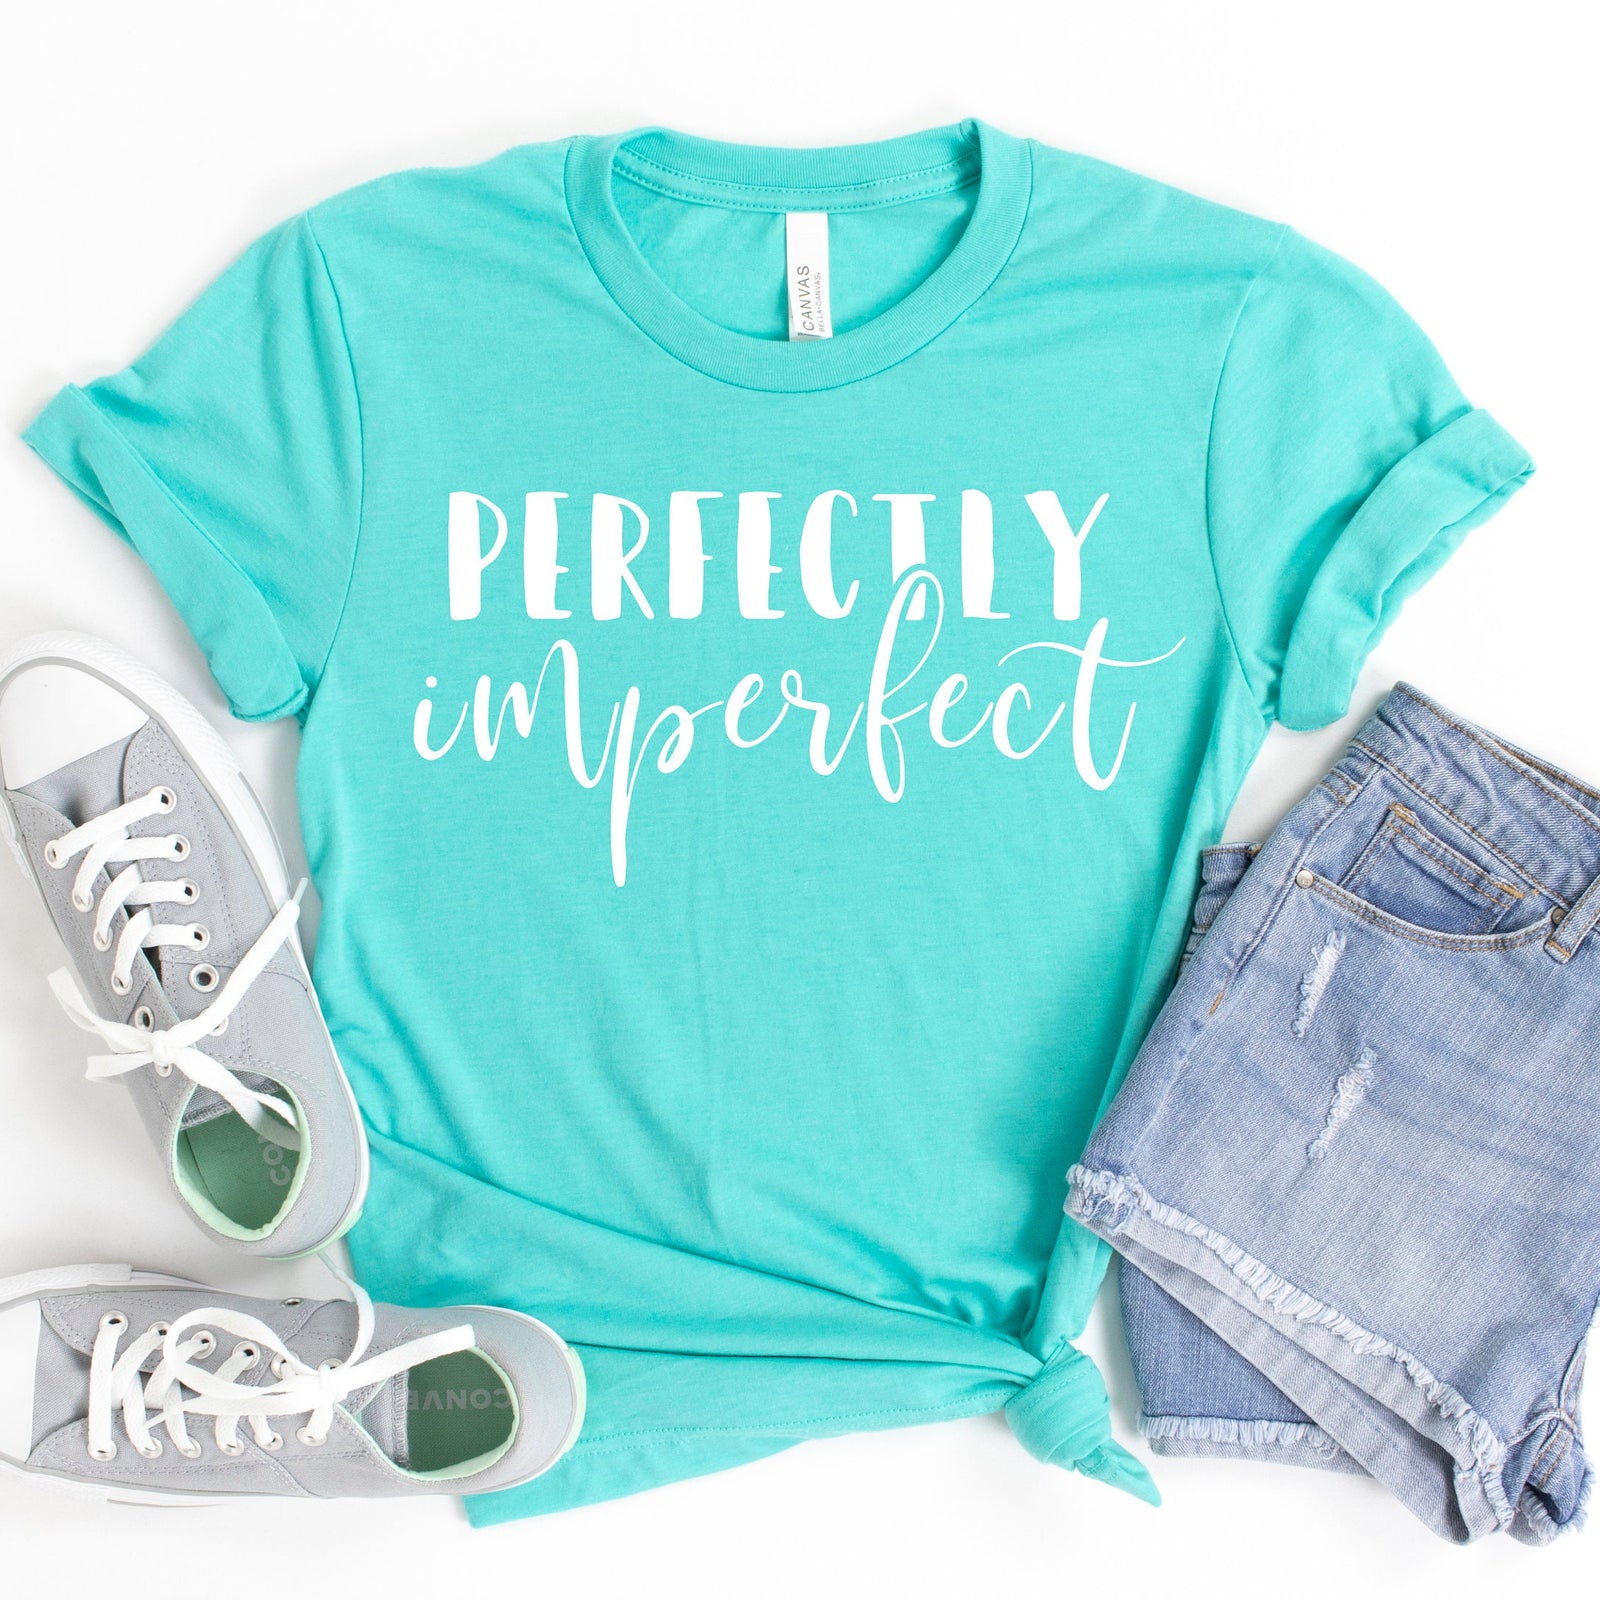 Perfectly Imperfect - Adult Unisex T Shirt  - Motivational - Inspirational